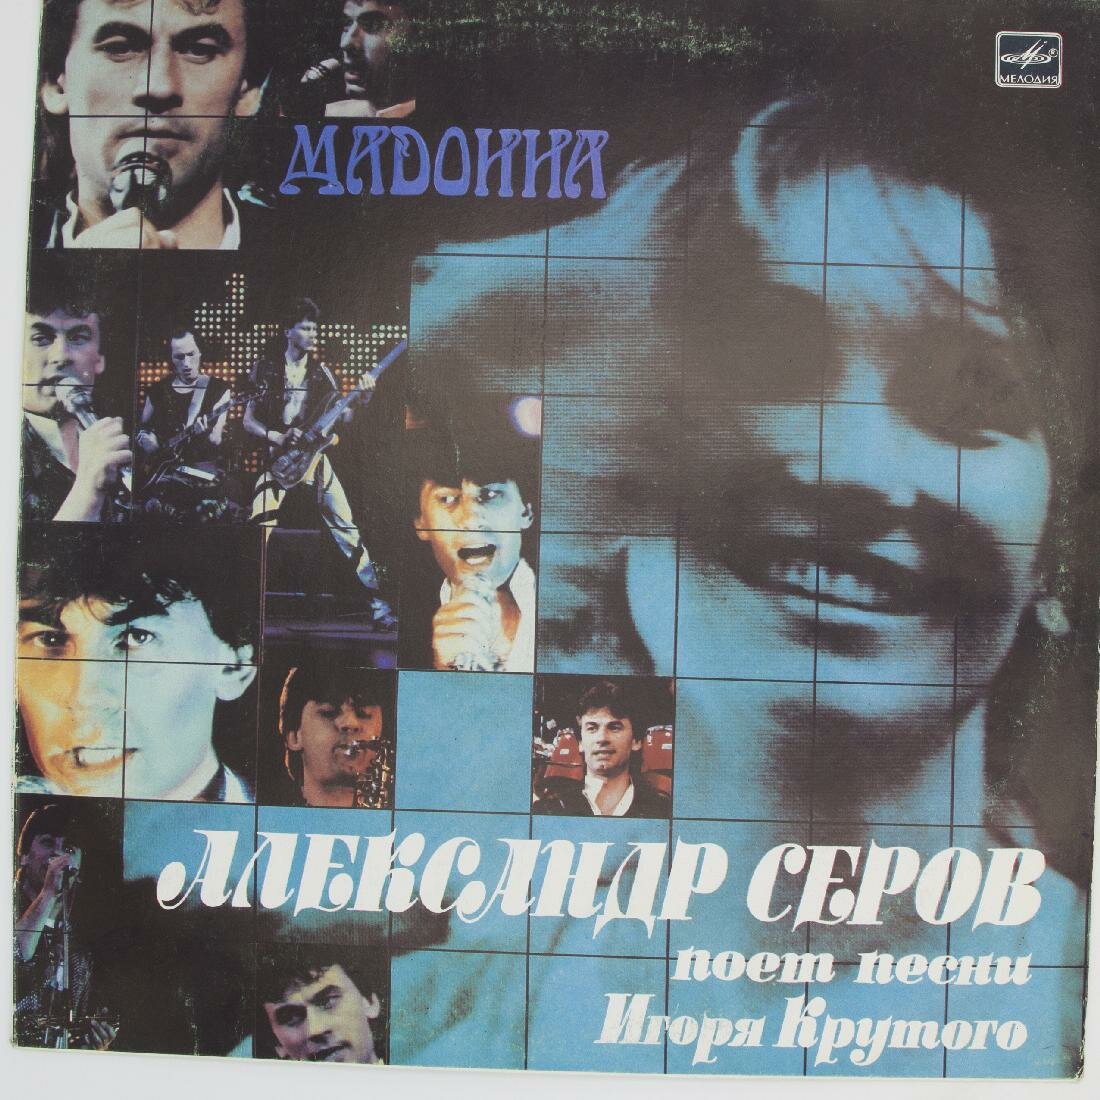 Виниловая пластинка Александр Серов - Мадонна